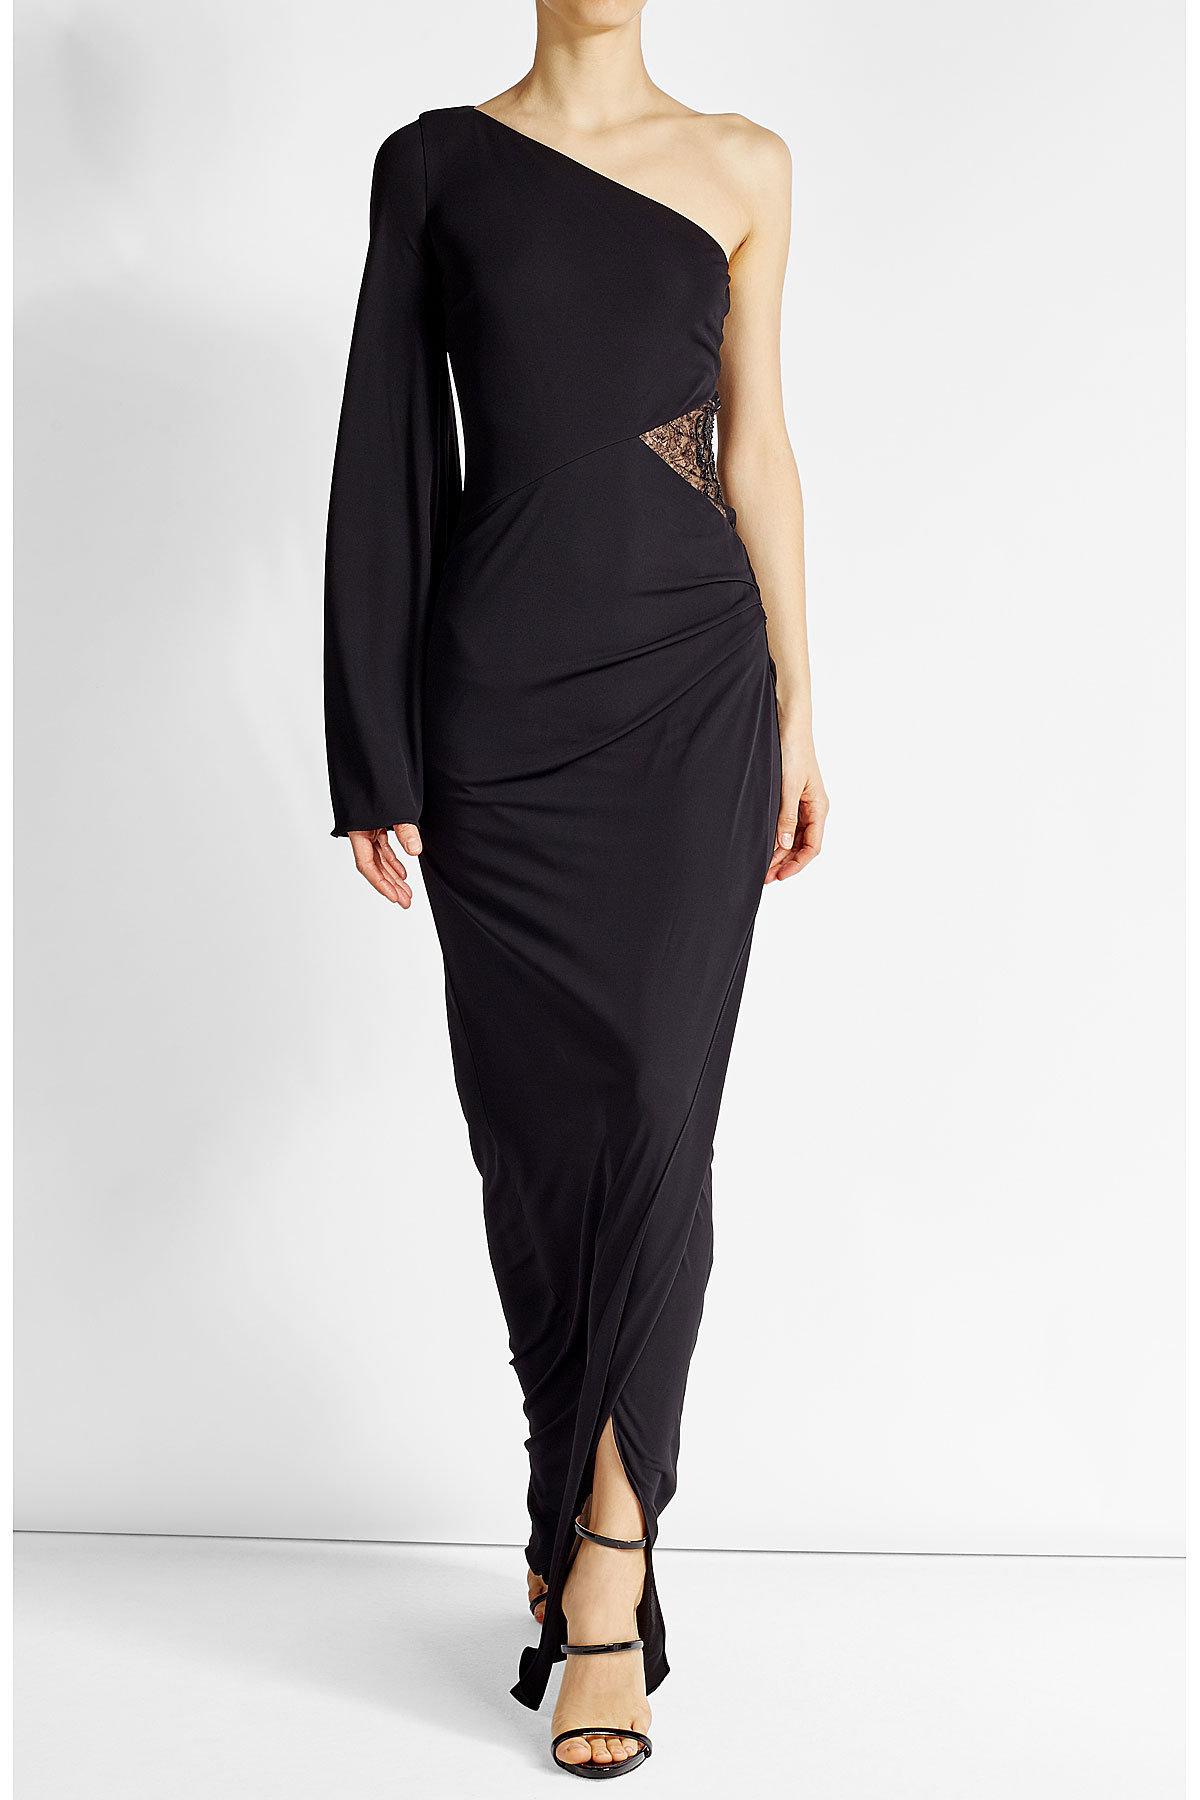 Roberto cavalli Floor Length Dress With Asymmetric Sleeve in Black | Lyst